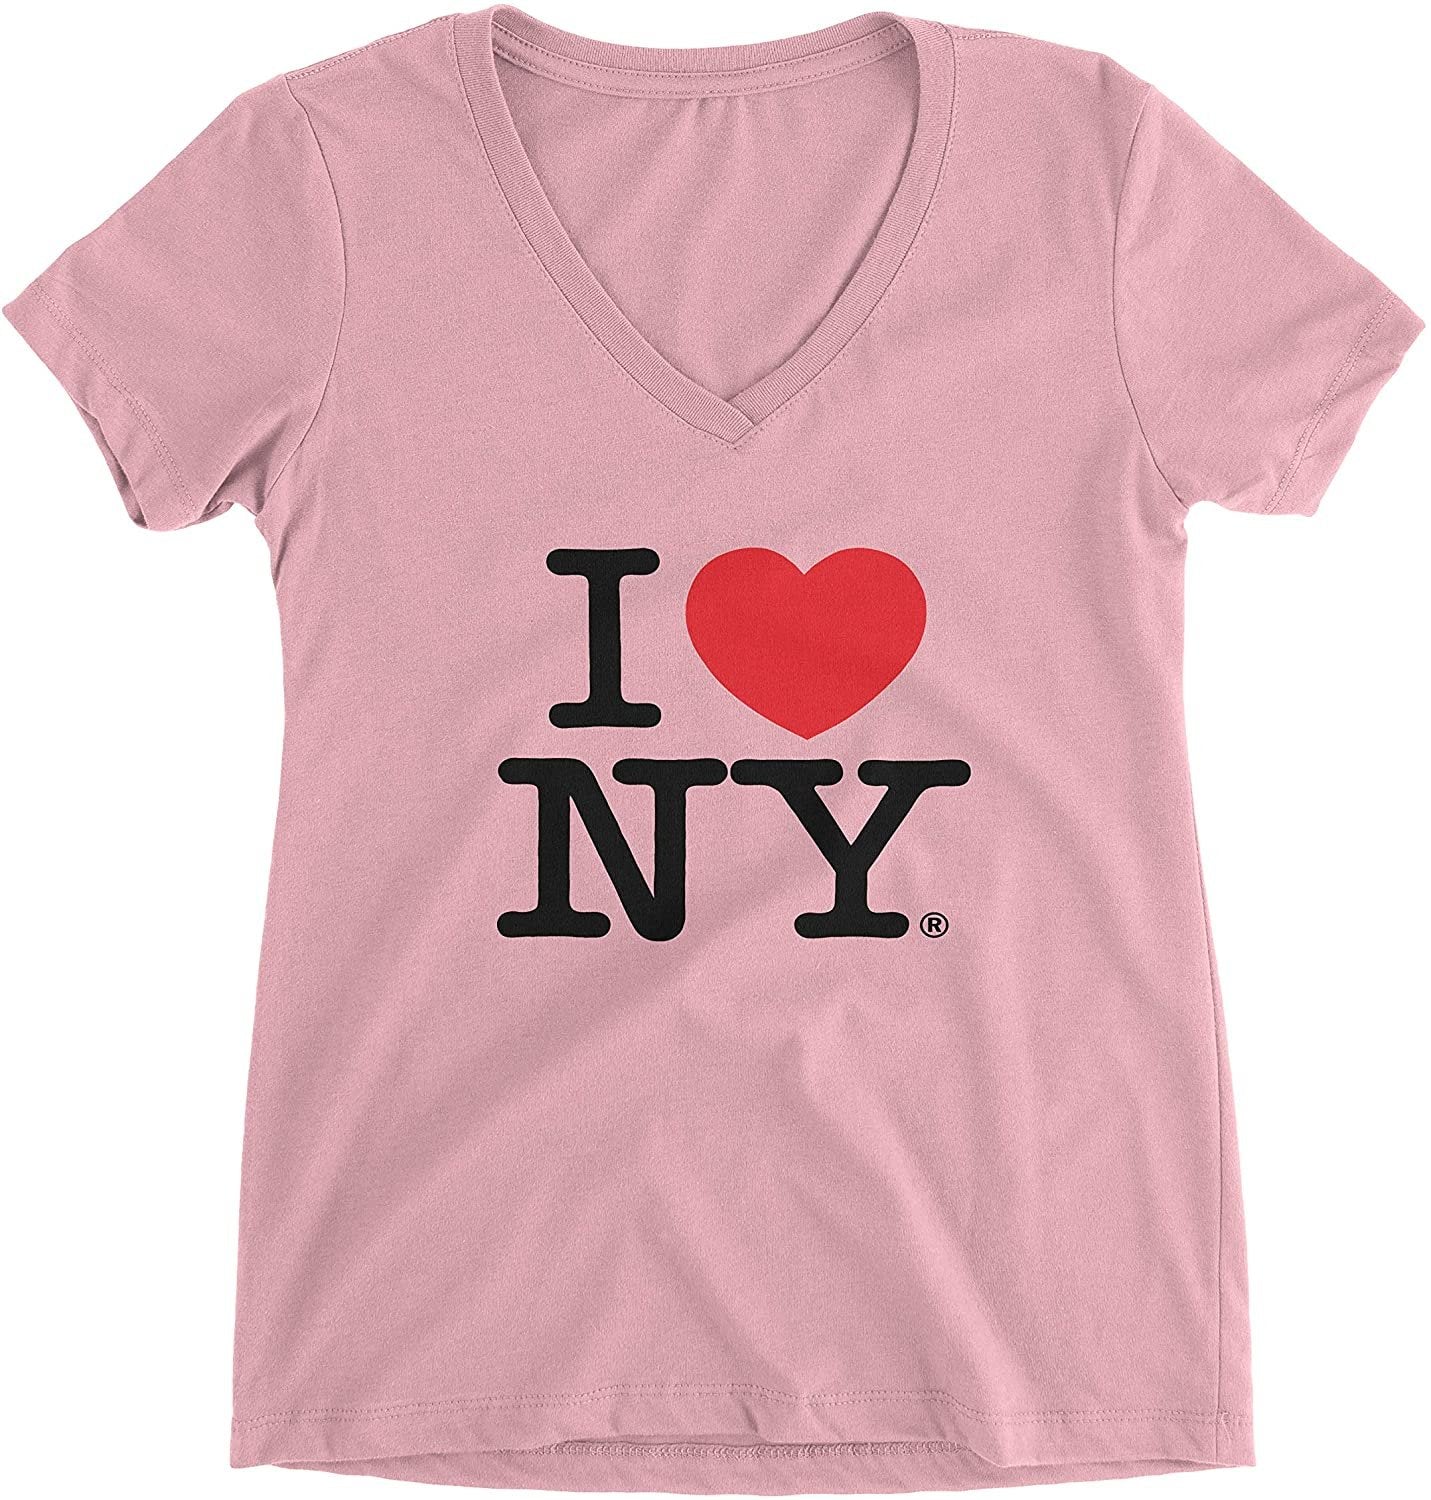 I Love NY Ladies V-Neck T-Shirt Tee Officially Licensed